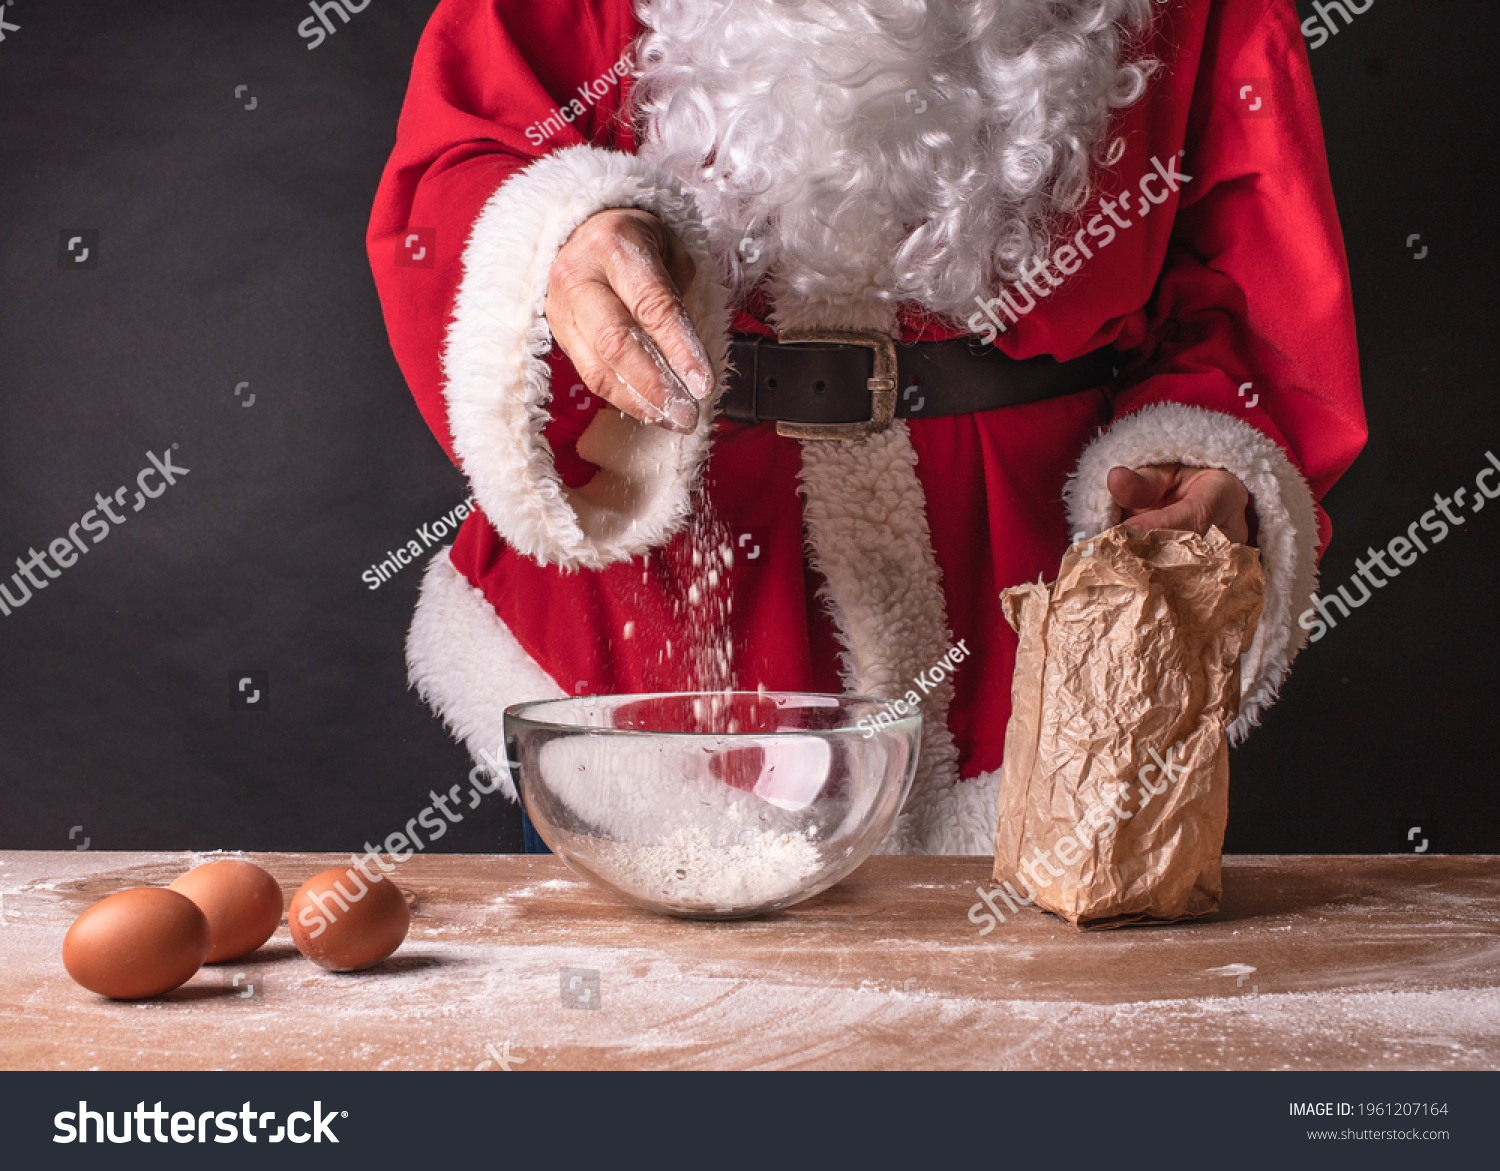 Santa preparing to bake pancakes, pastries. Red santa clothes on a black background. #1961207164